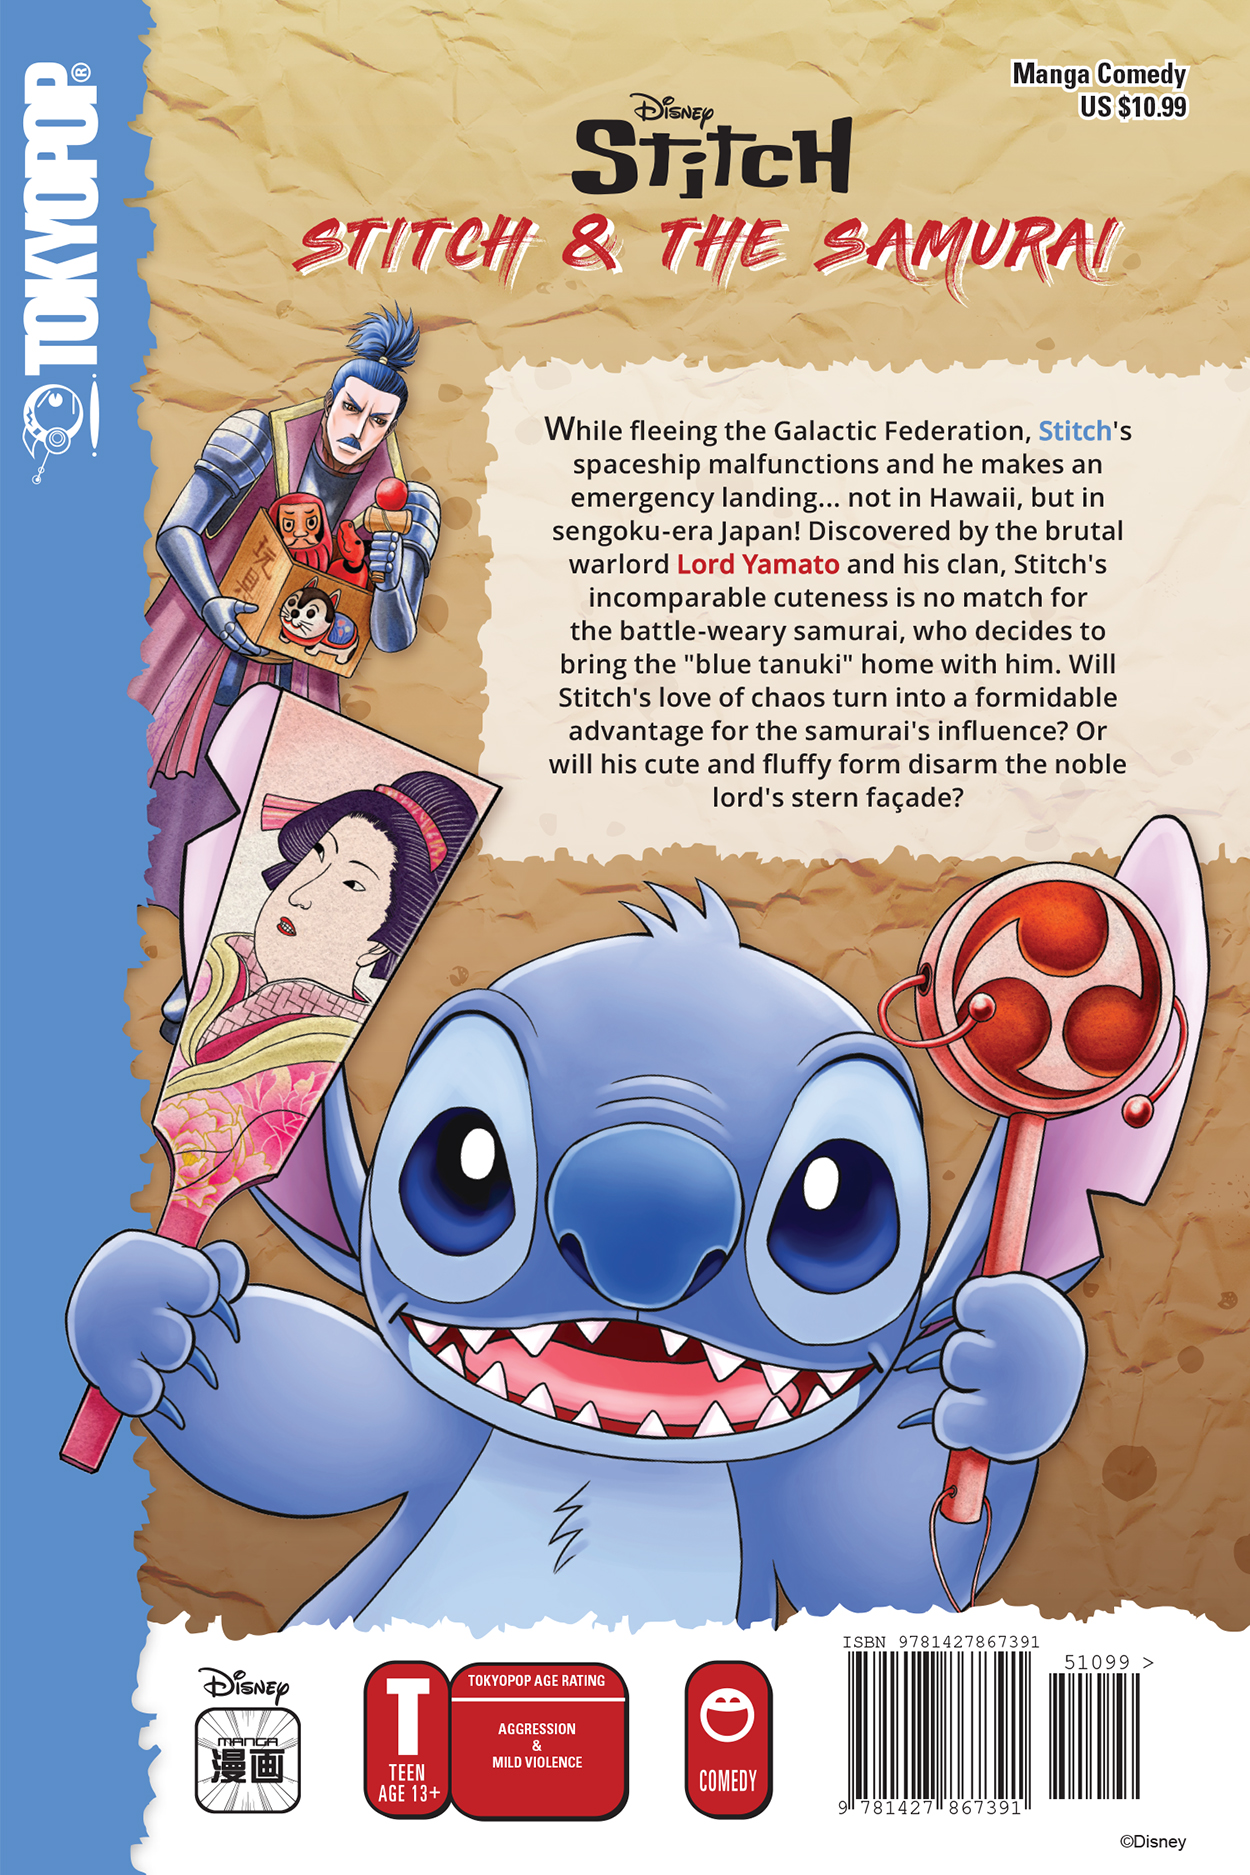 Disney Manga: Stitch & the Samurai, Official Manga Trailer